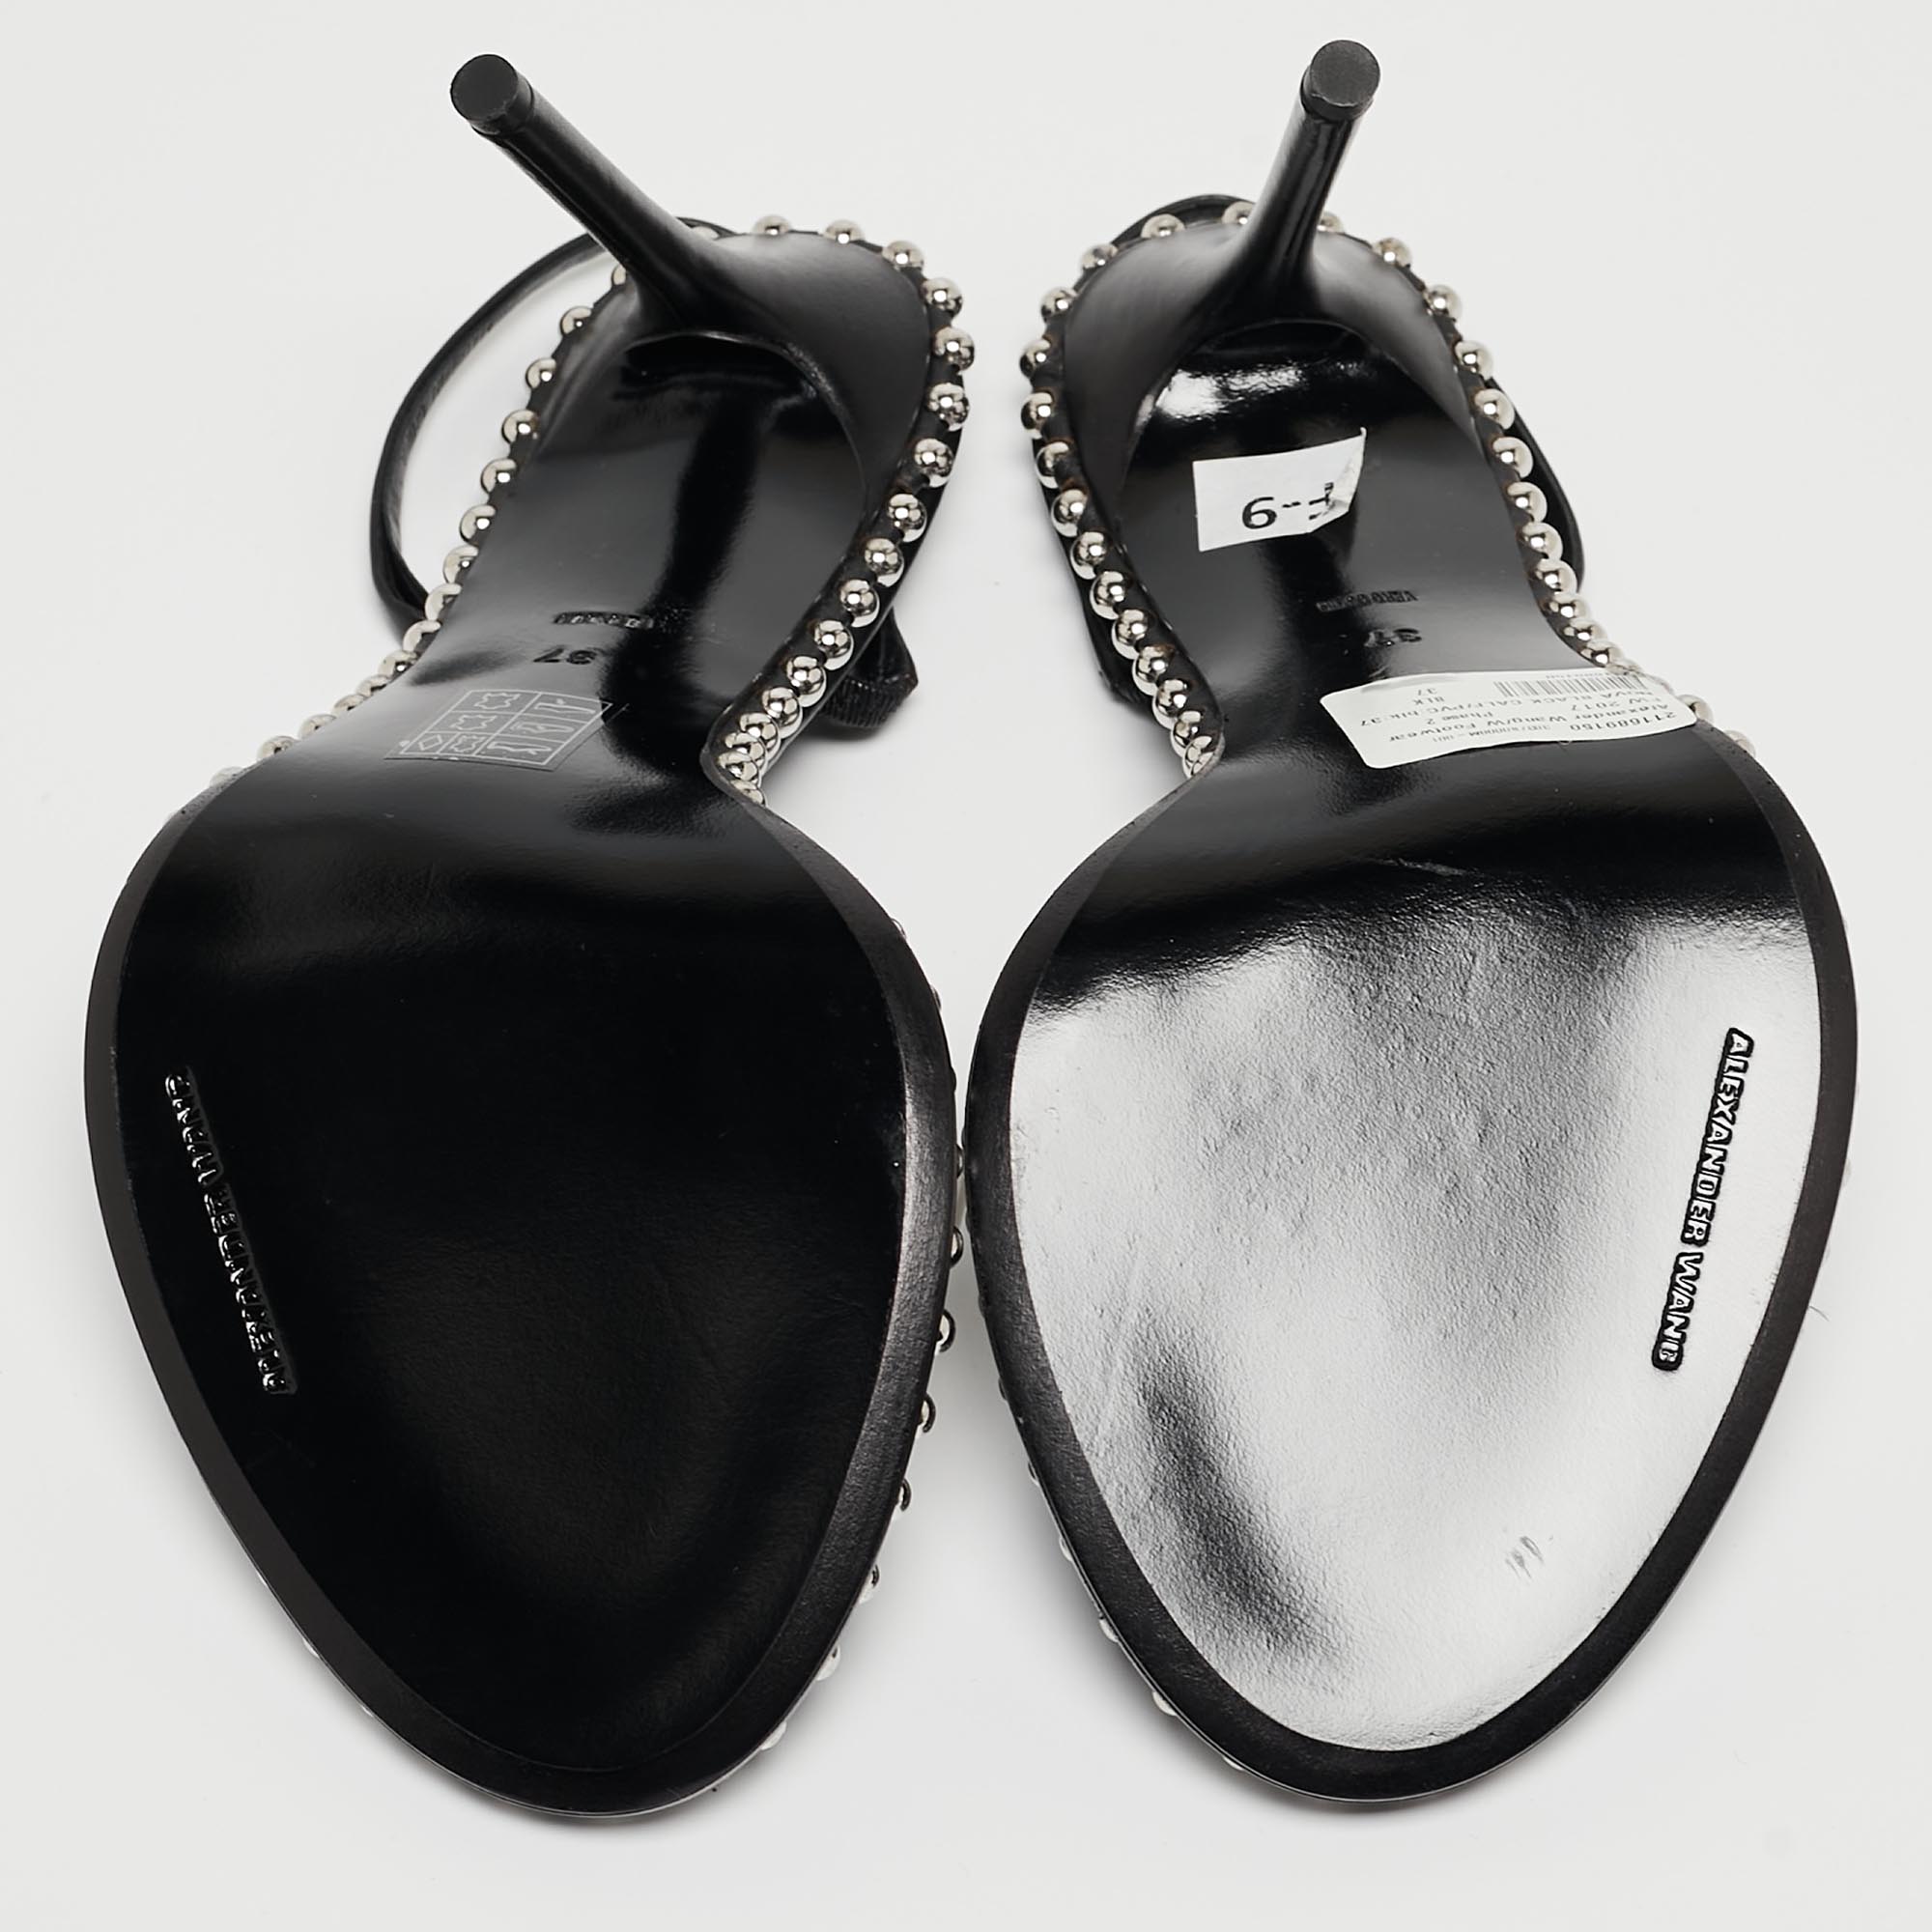 Alexander Wang Black Leather And PVC Studded Nova Slingback Sandals Size 37